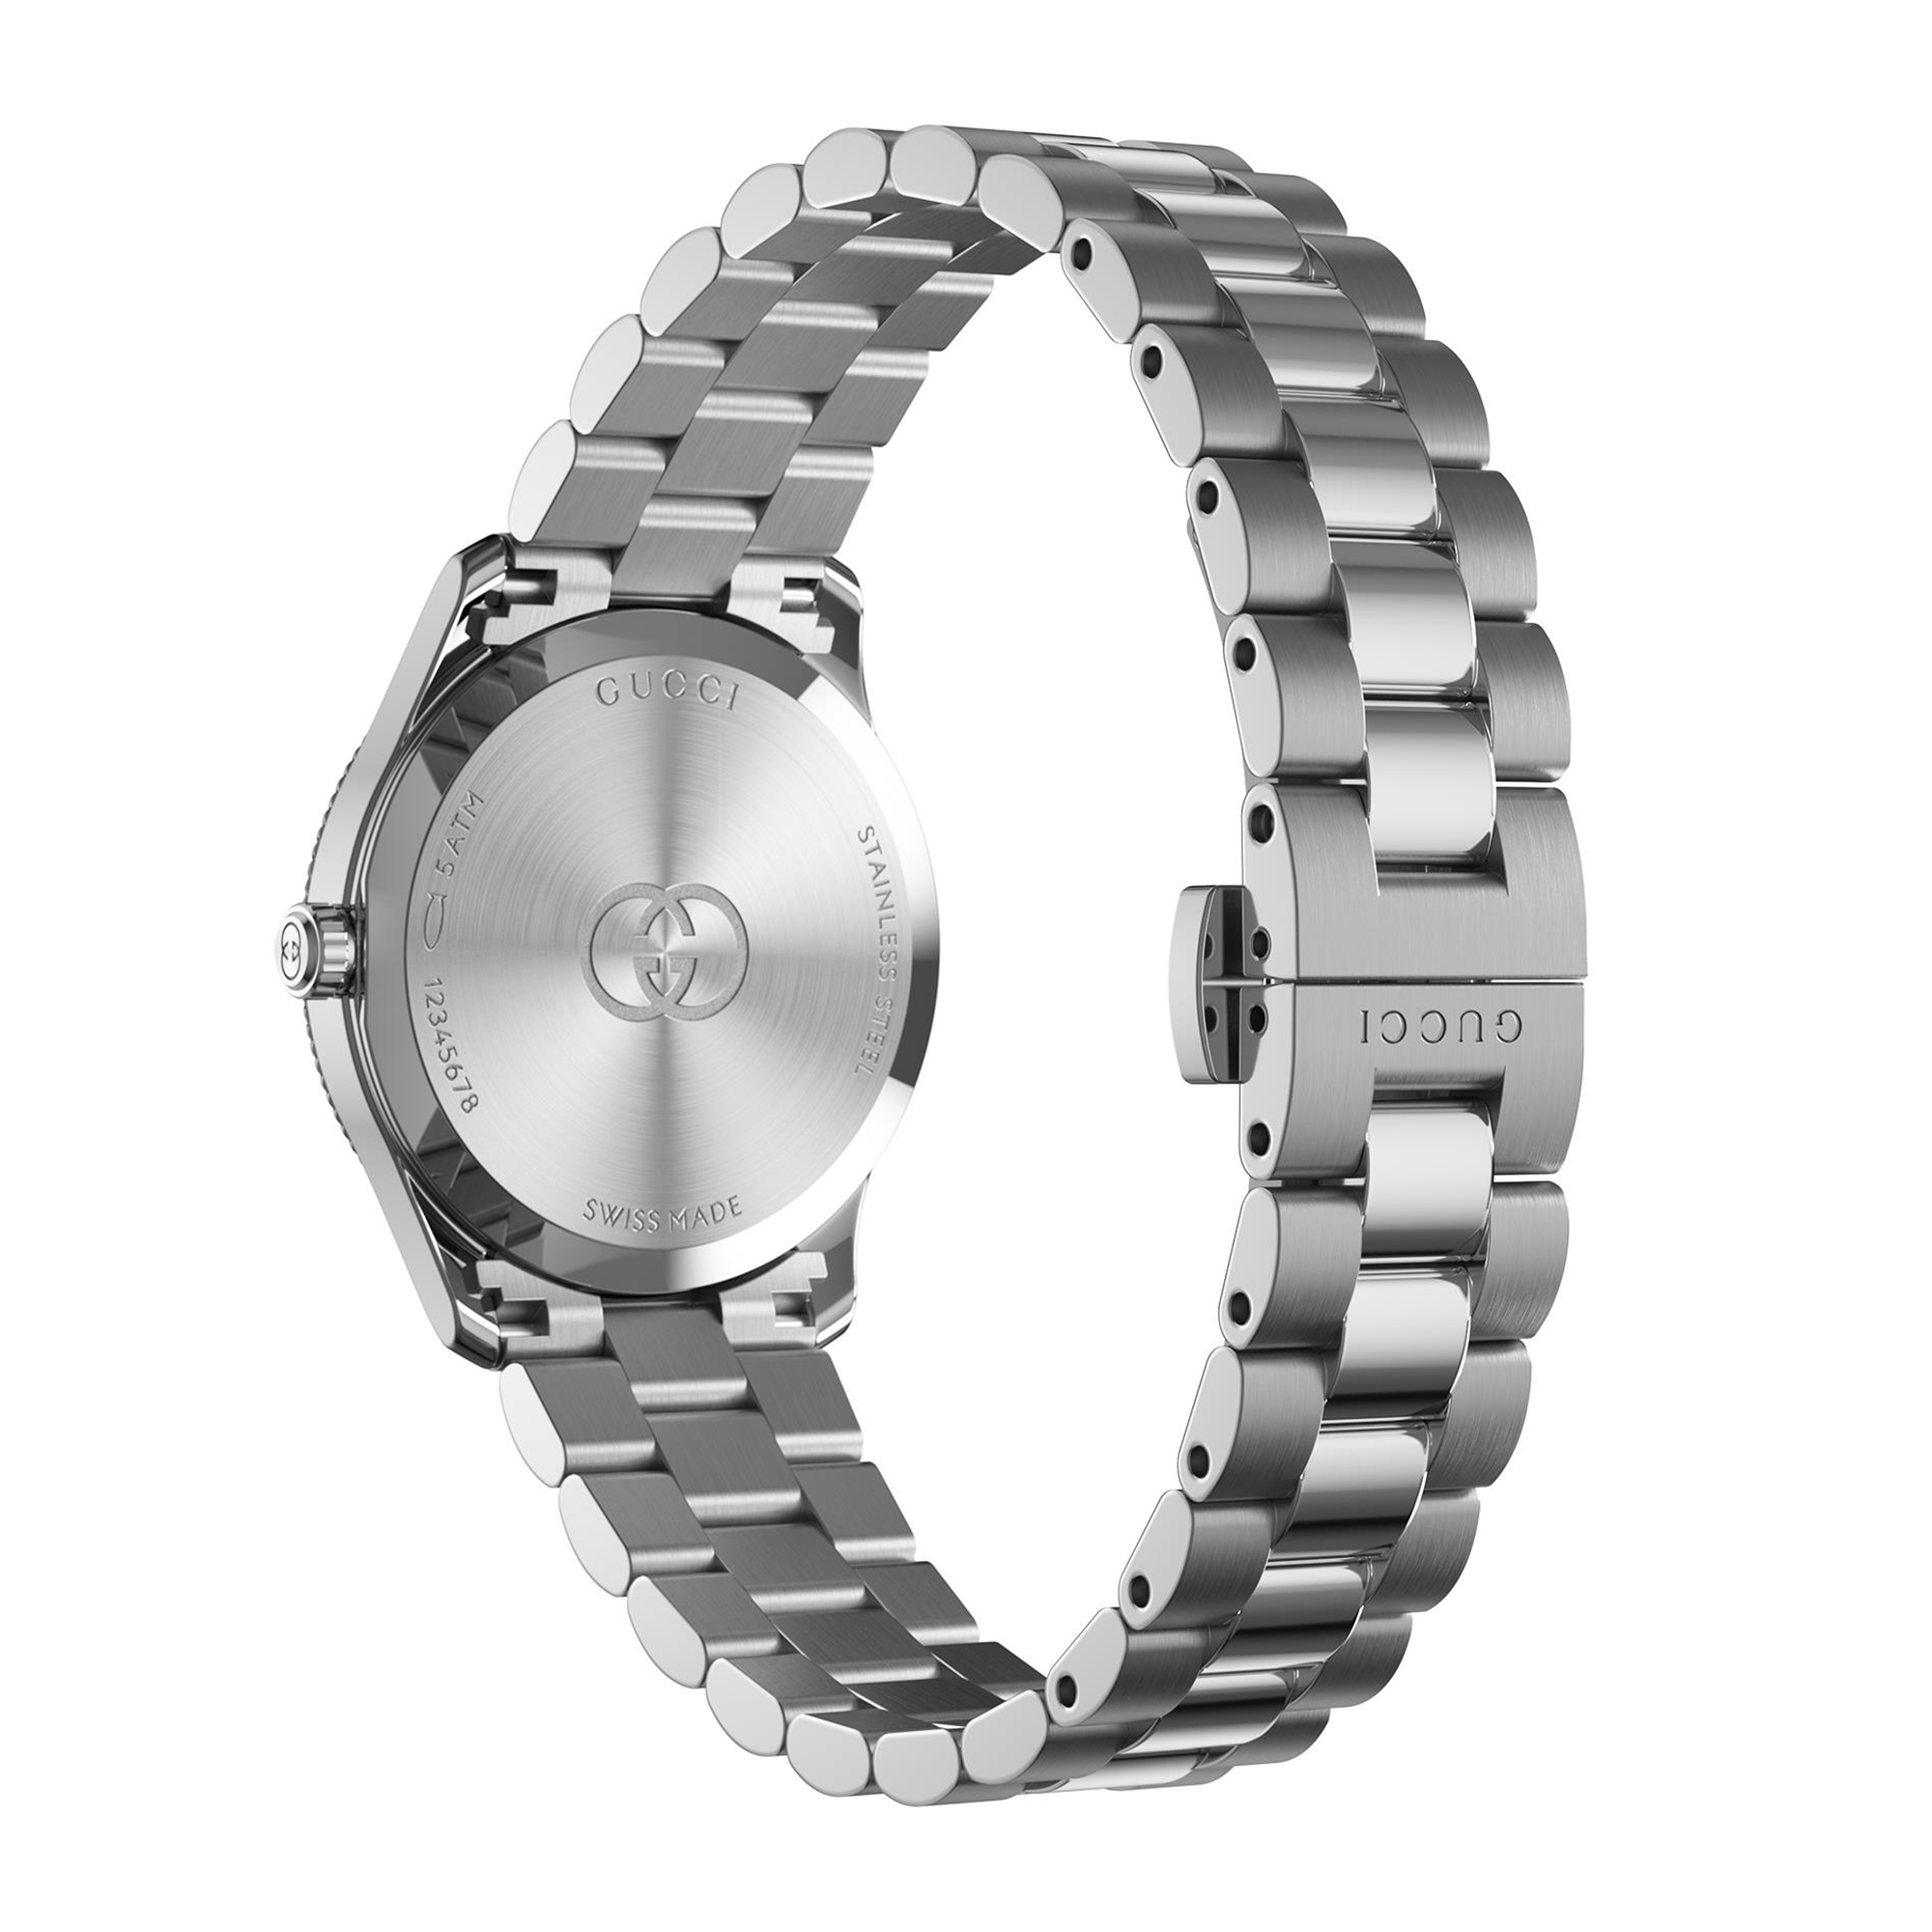 G-Timeless Quartz 29mm Stainless Steel Pink Dial Bracelet Watch